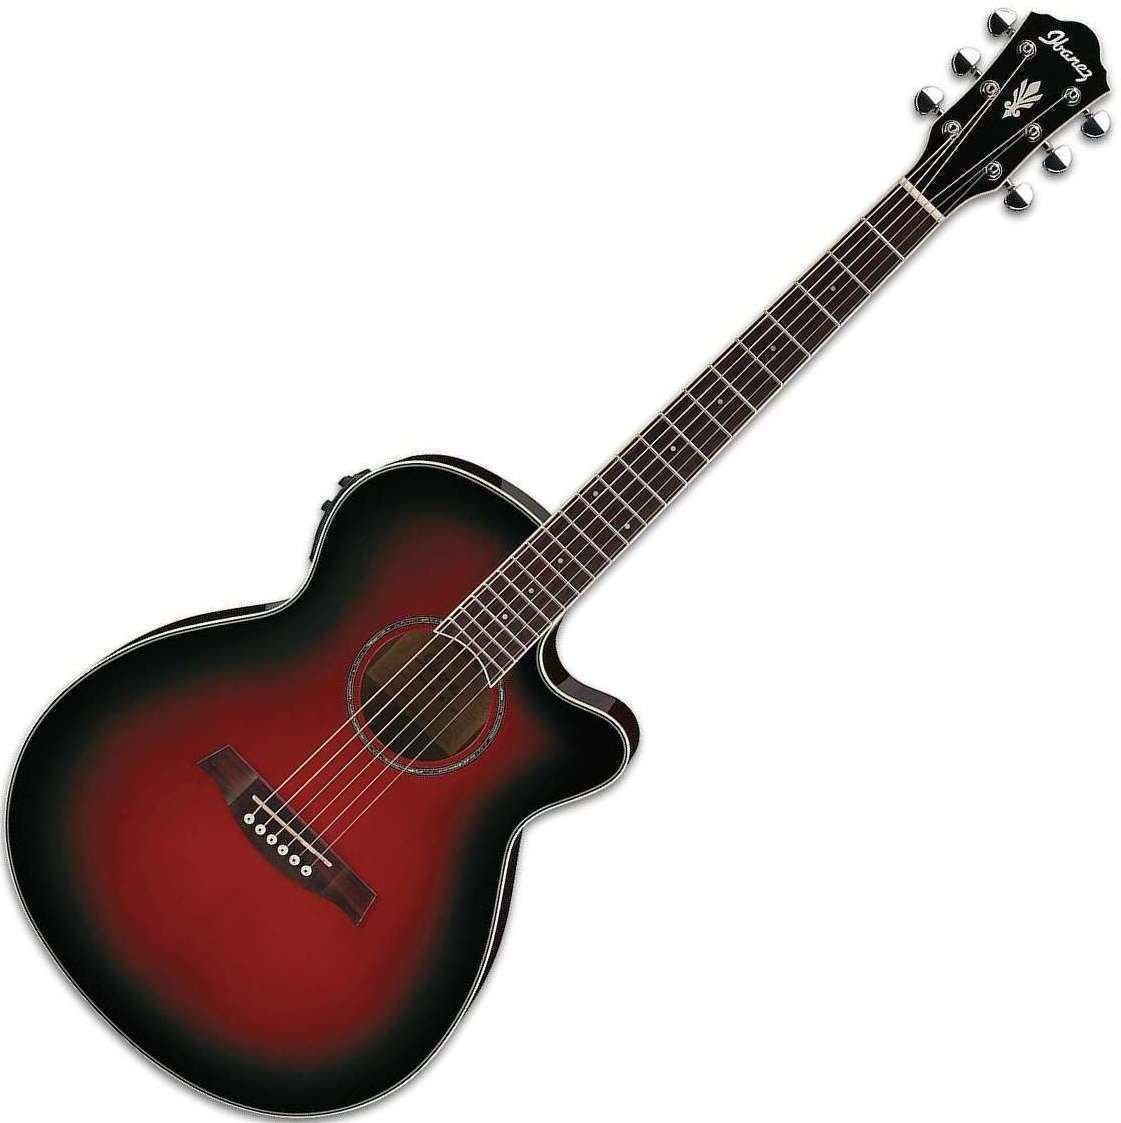 Jumbo elektro-akoestische gitaar Ibanez AEG 10II Transparent Red Sunburst